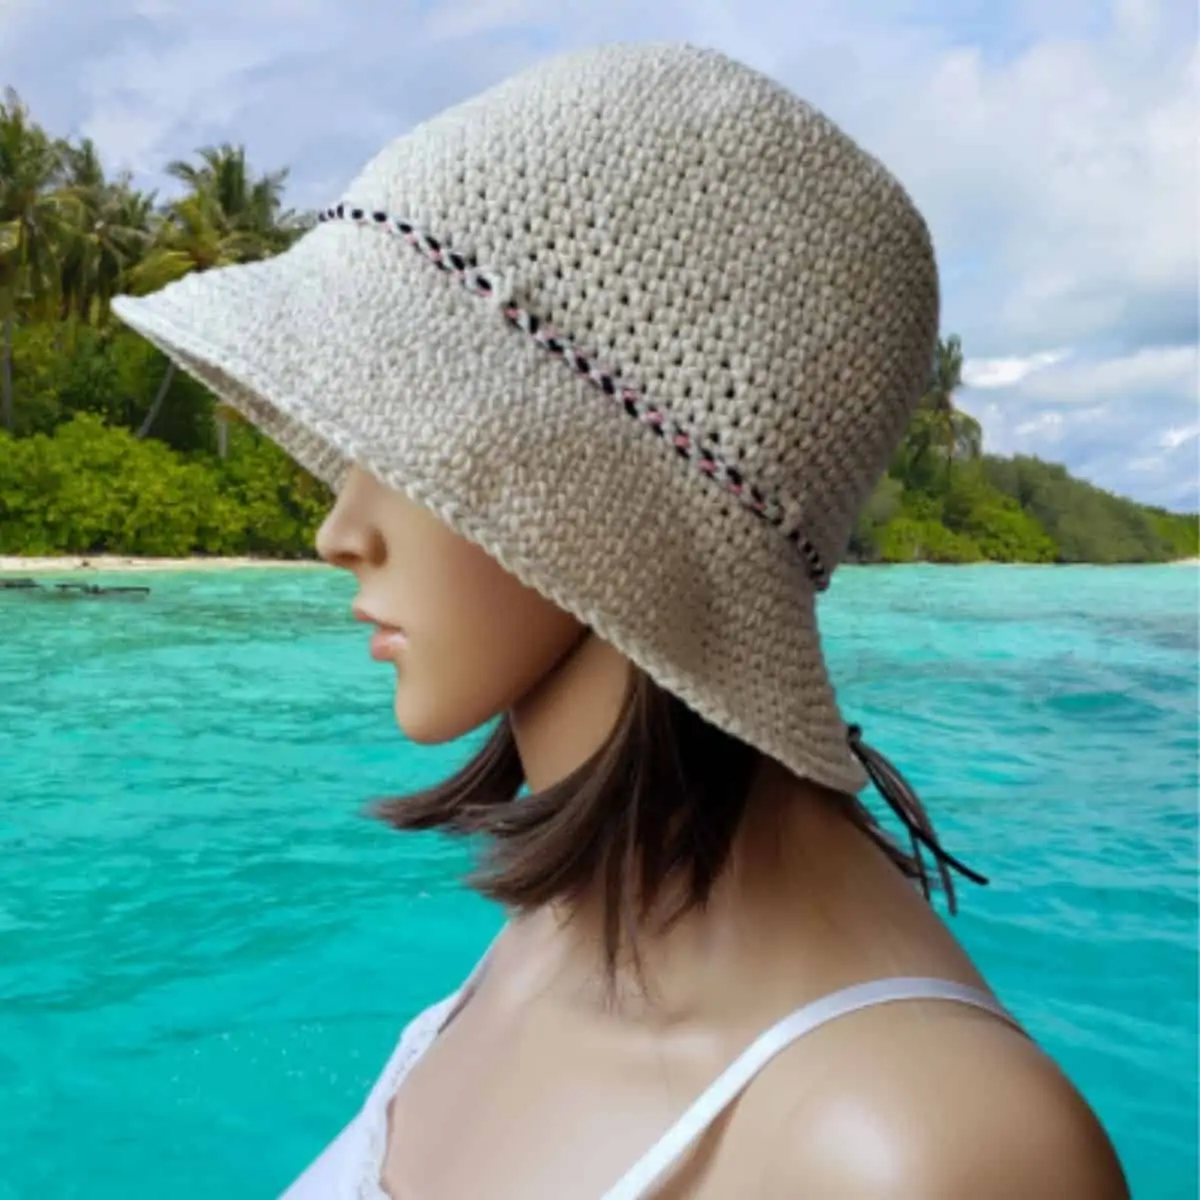 mannequin head wearing a sun hat